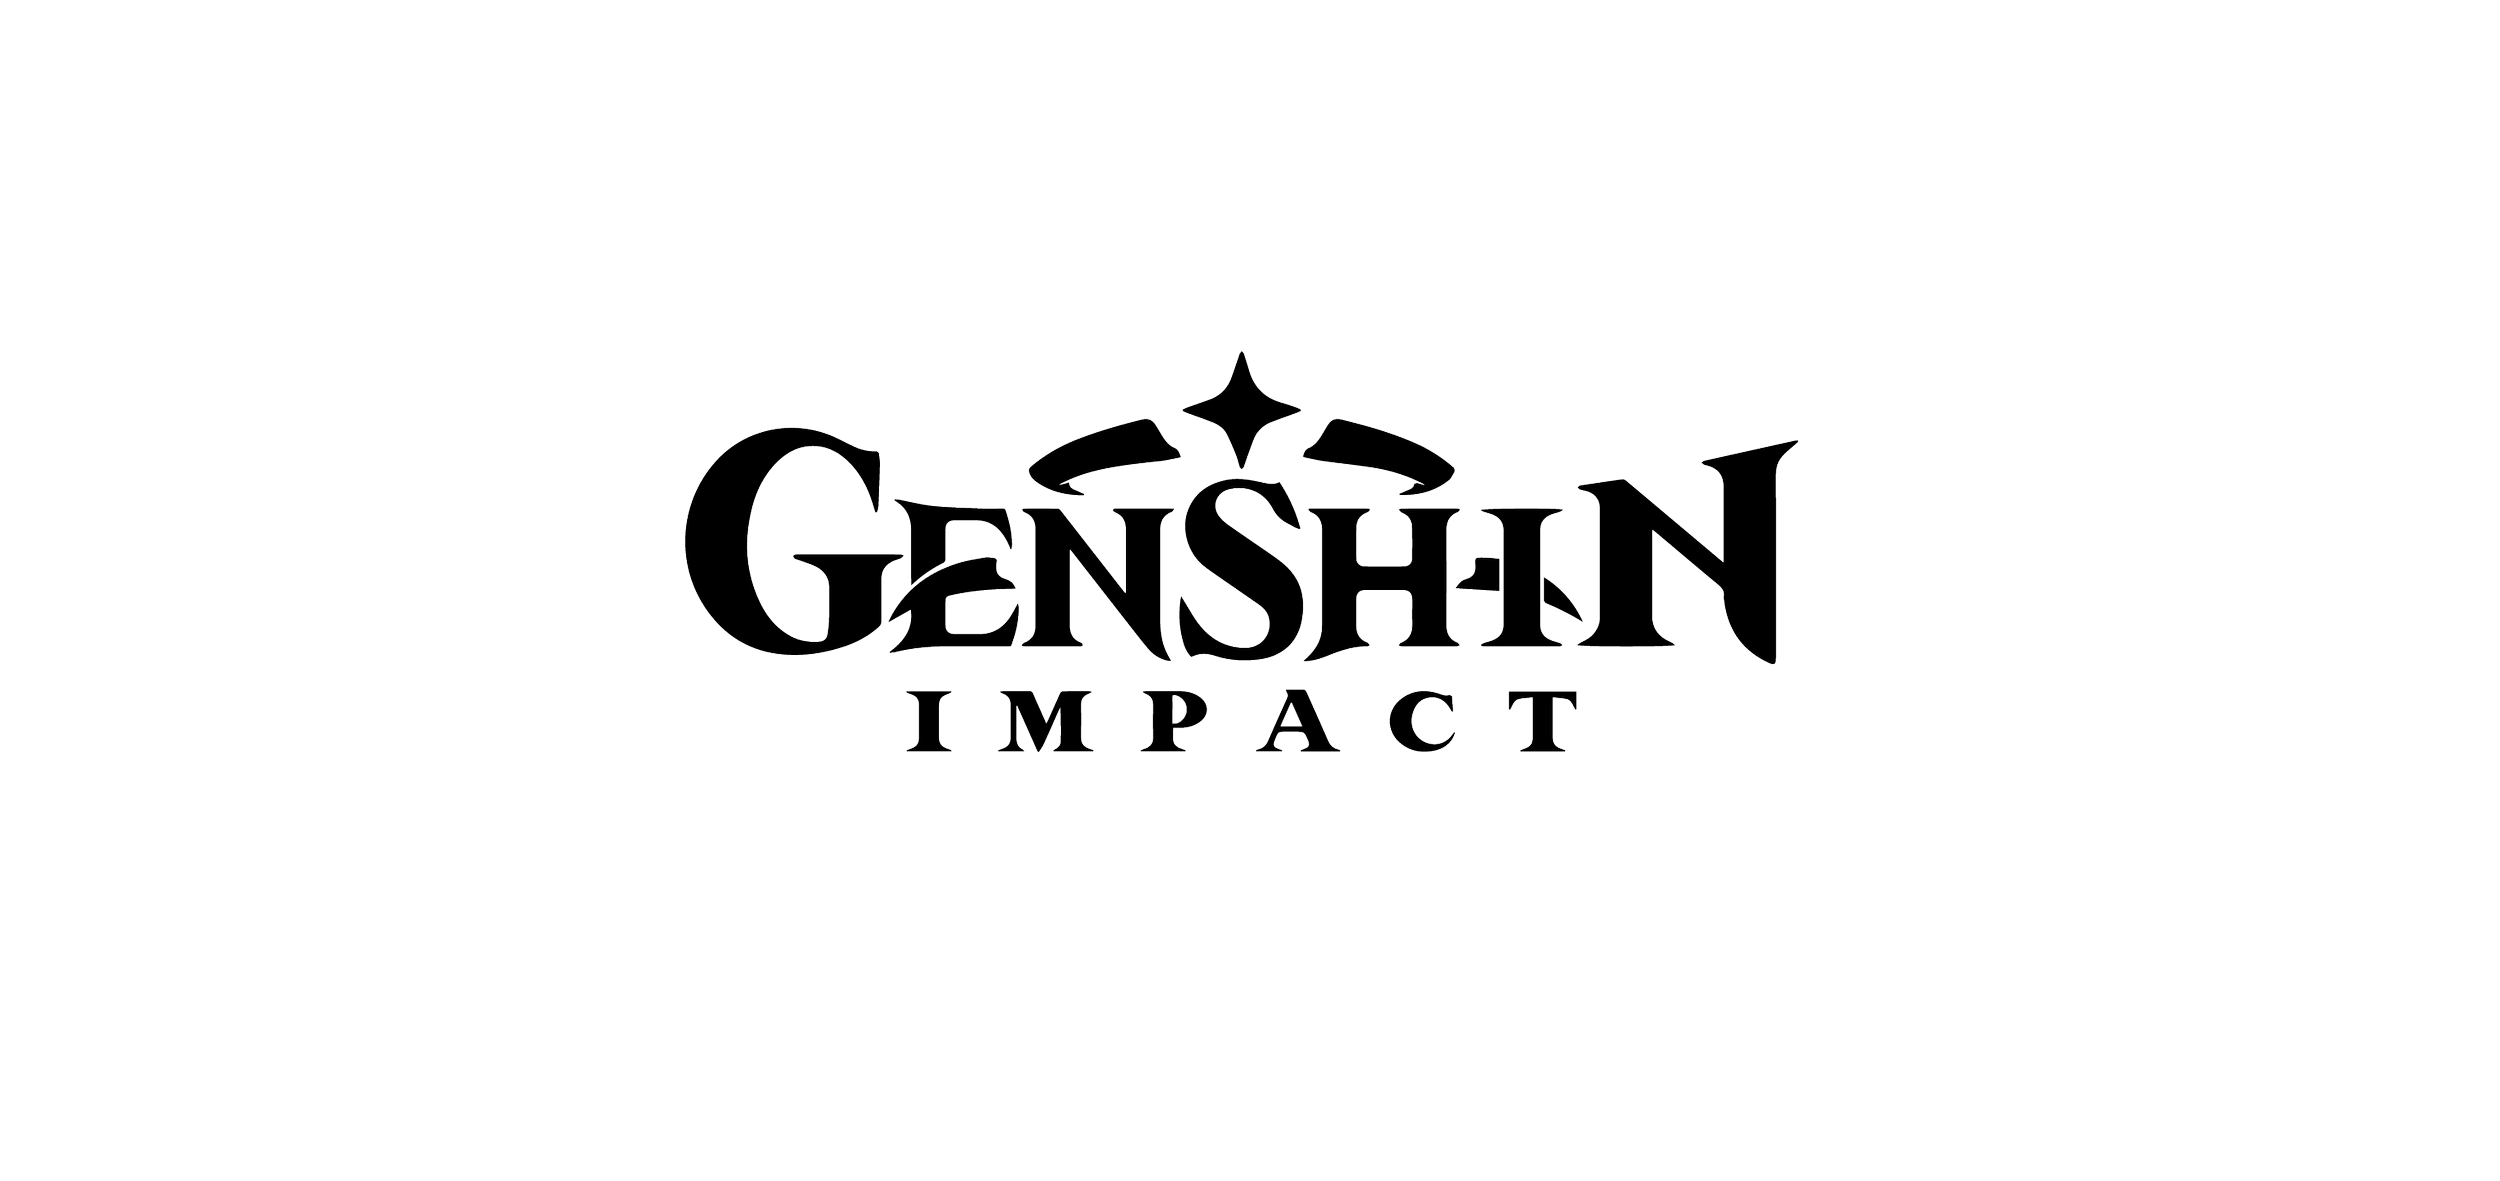 Genshin icon. Геншин логотип. Михойо Геншин. Геншин Импакт лого. Логотип надпись.